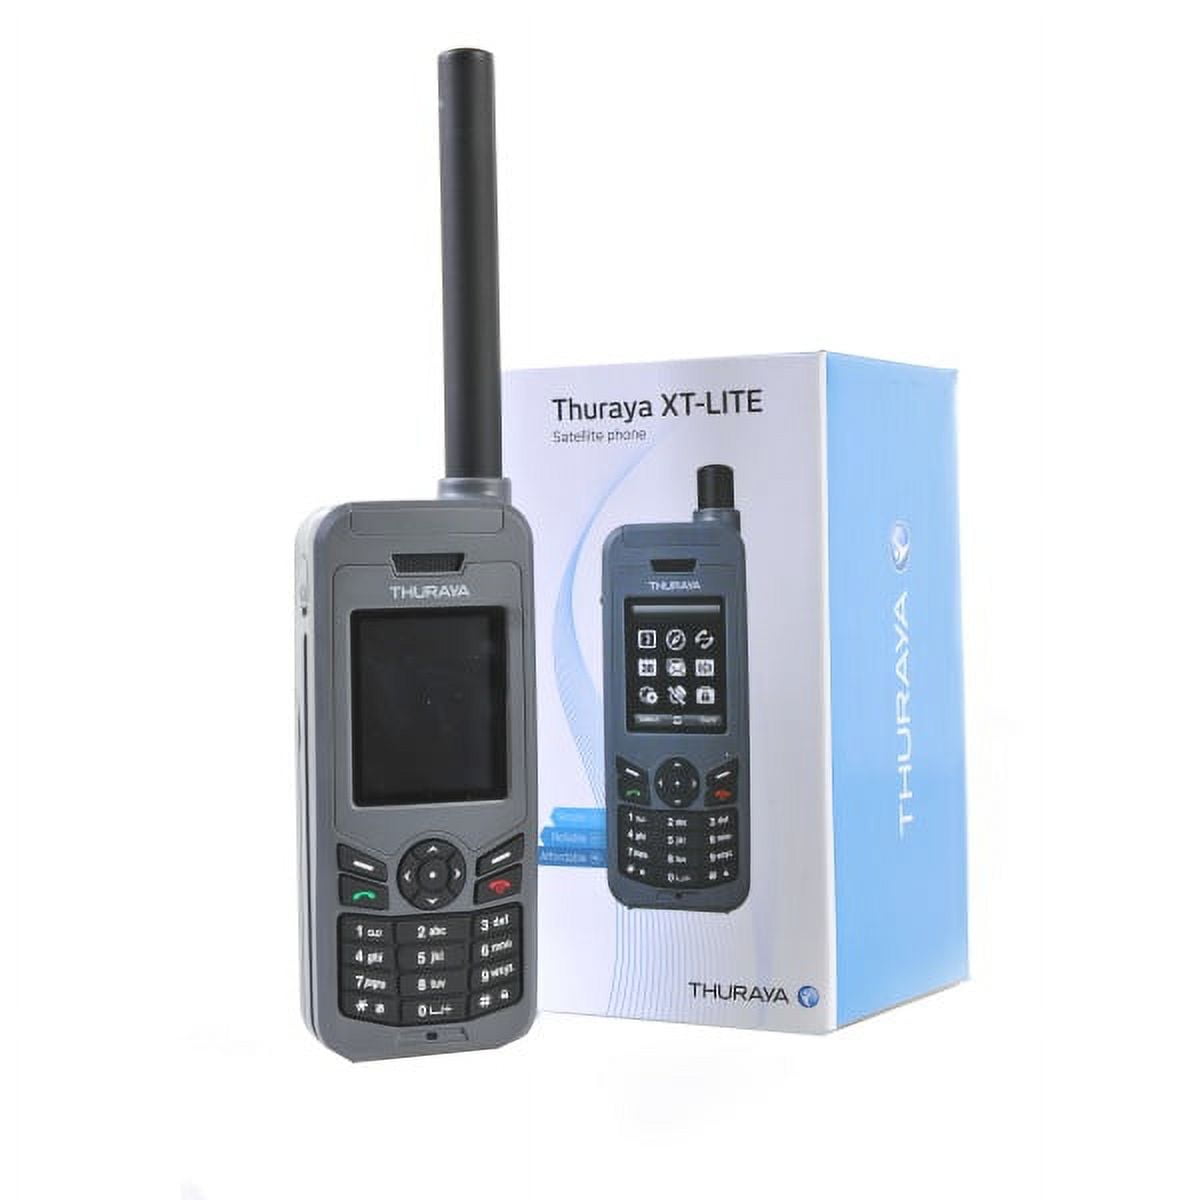 Thuraya XT LITE Satellite Phone 56d22b5f 7da5 4266 8713 7e6ebda2a6a8.ceb2d3804a2d1ee52458ff6d4784f2ee